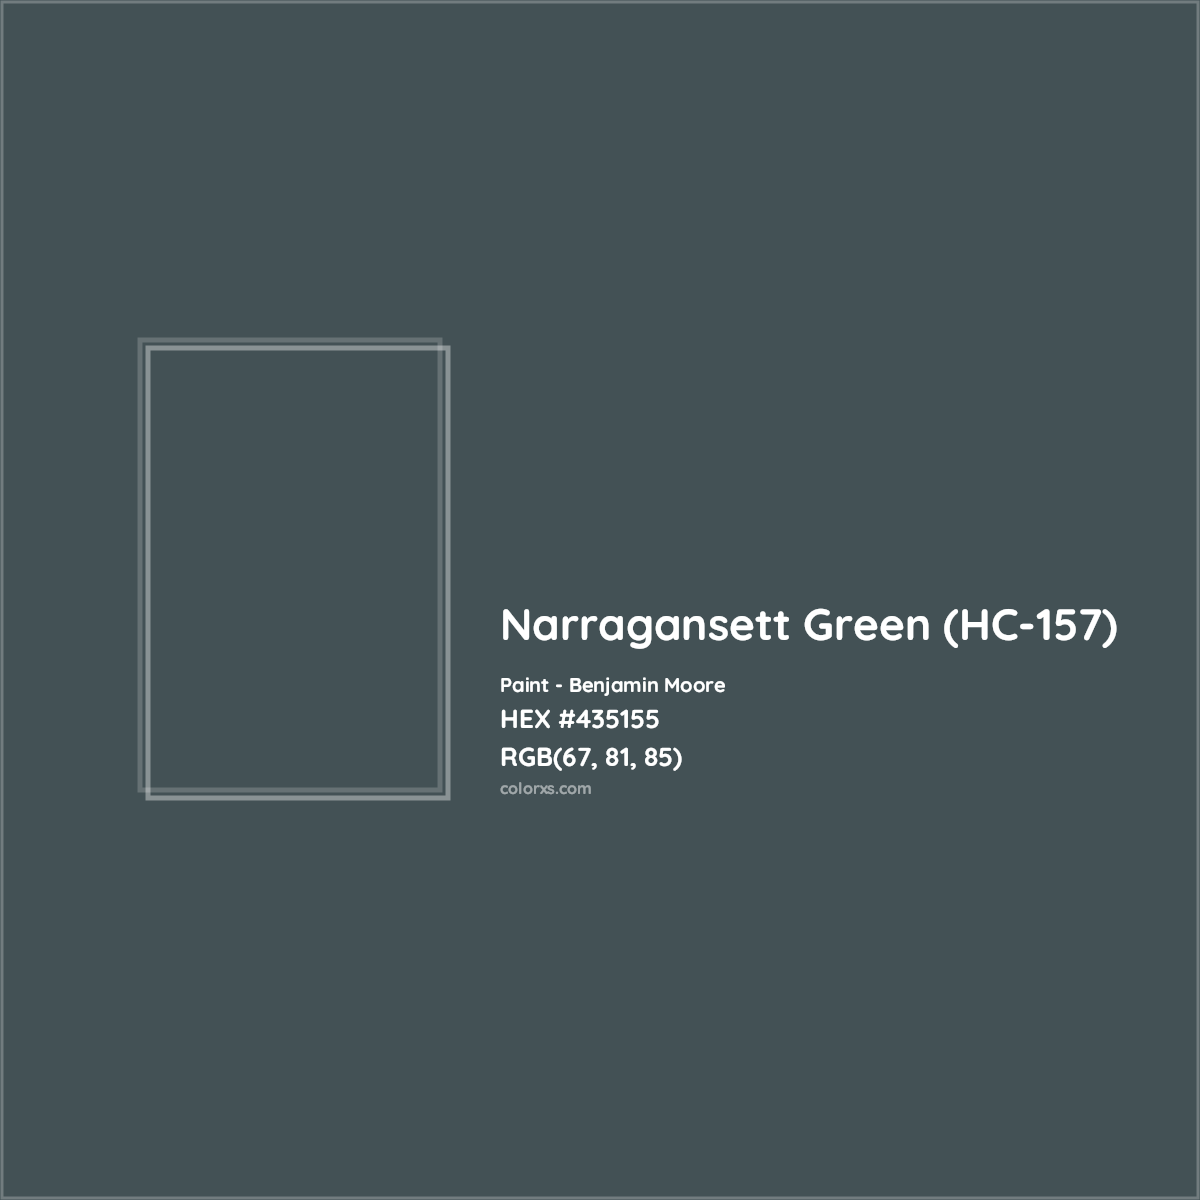 HEX #435155 Narragansett Green (HC-157) Paint Benjamin Moore - Color Code